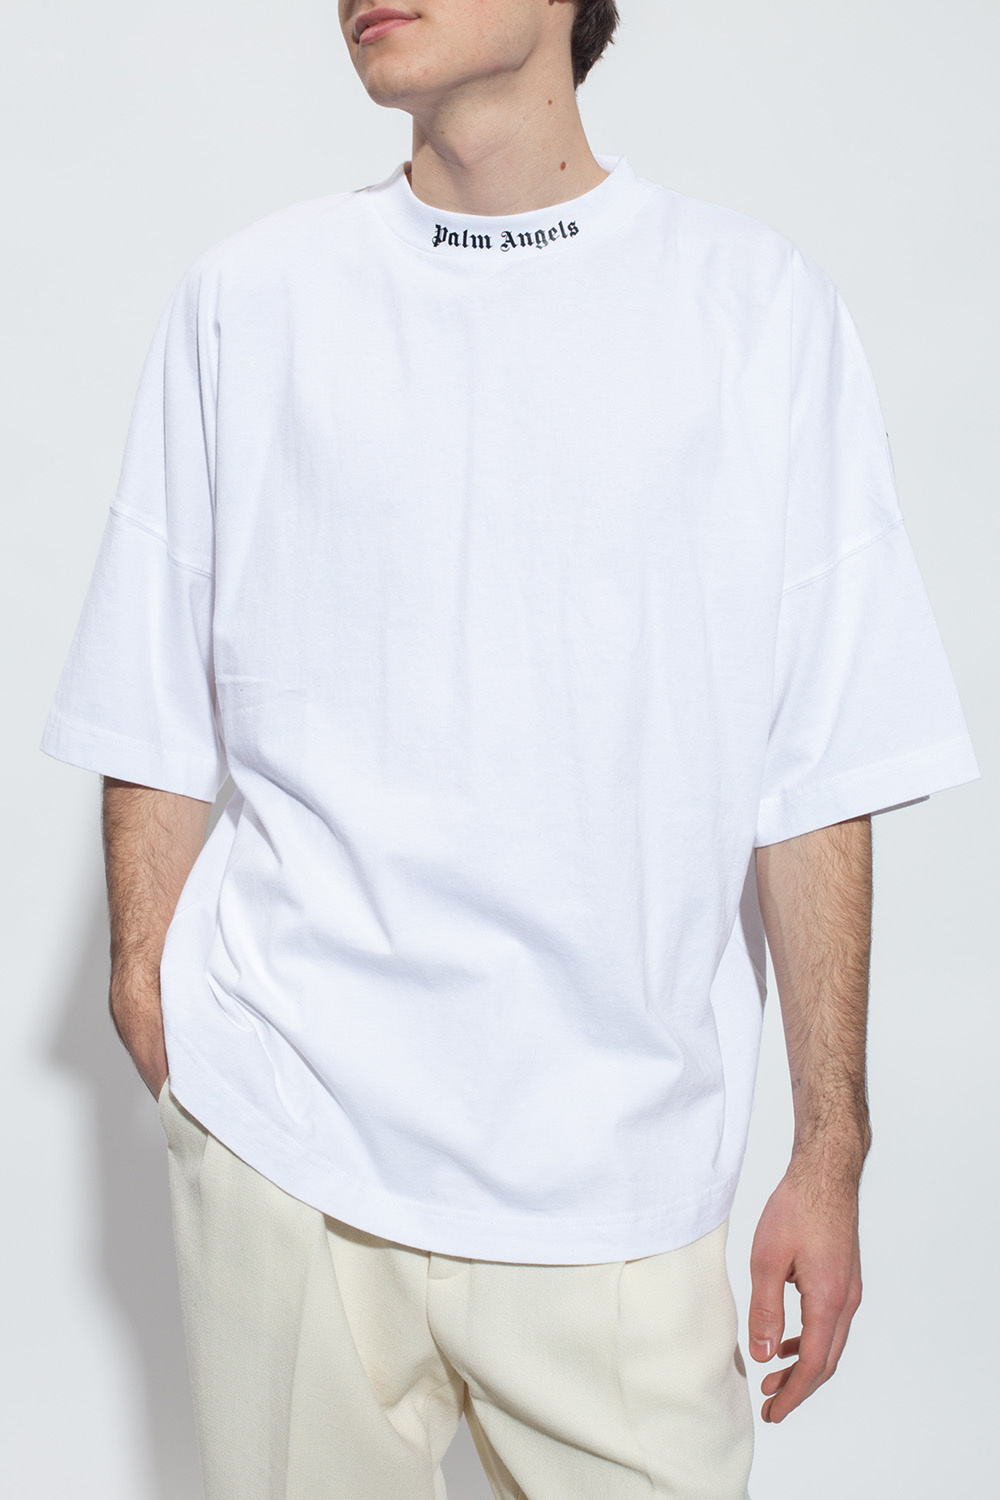 Palm Angels Oversize T-shirt, Men's Clothing